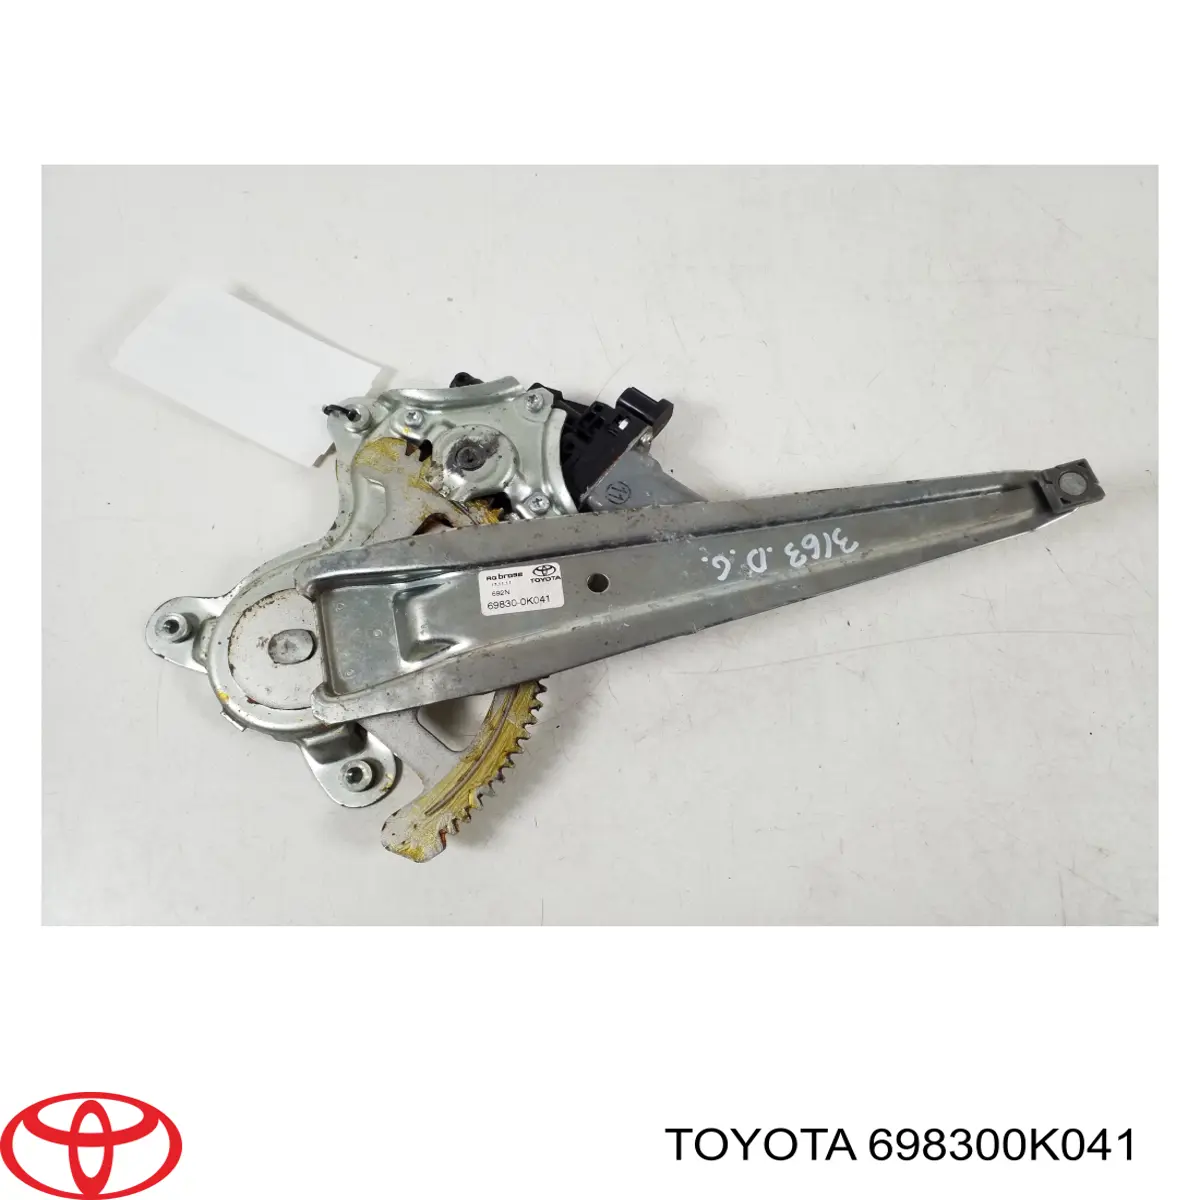 Mecanismo alzacristales, puerta trasera derecha para Toyota FORTUNER (N5, N6)